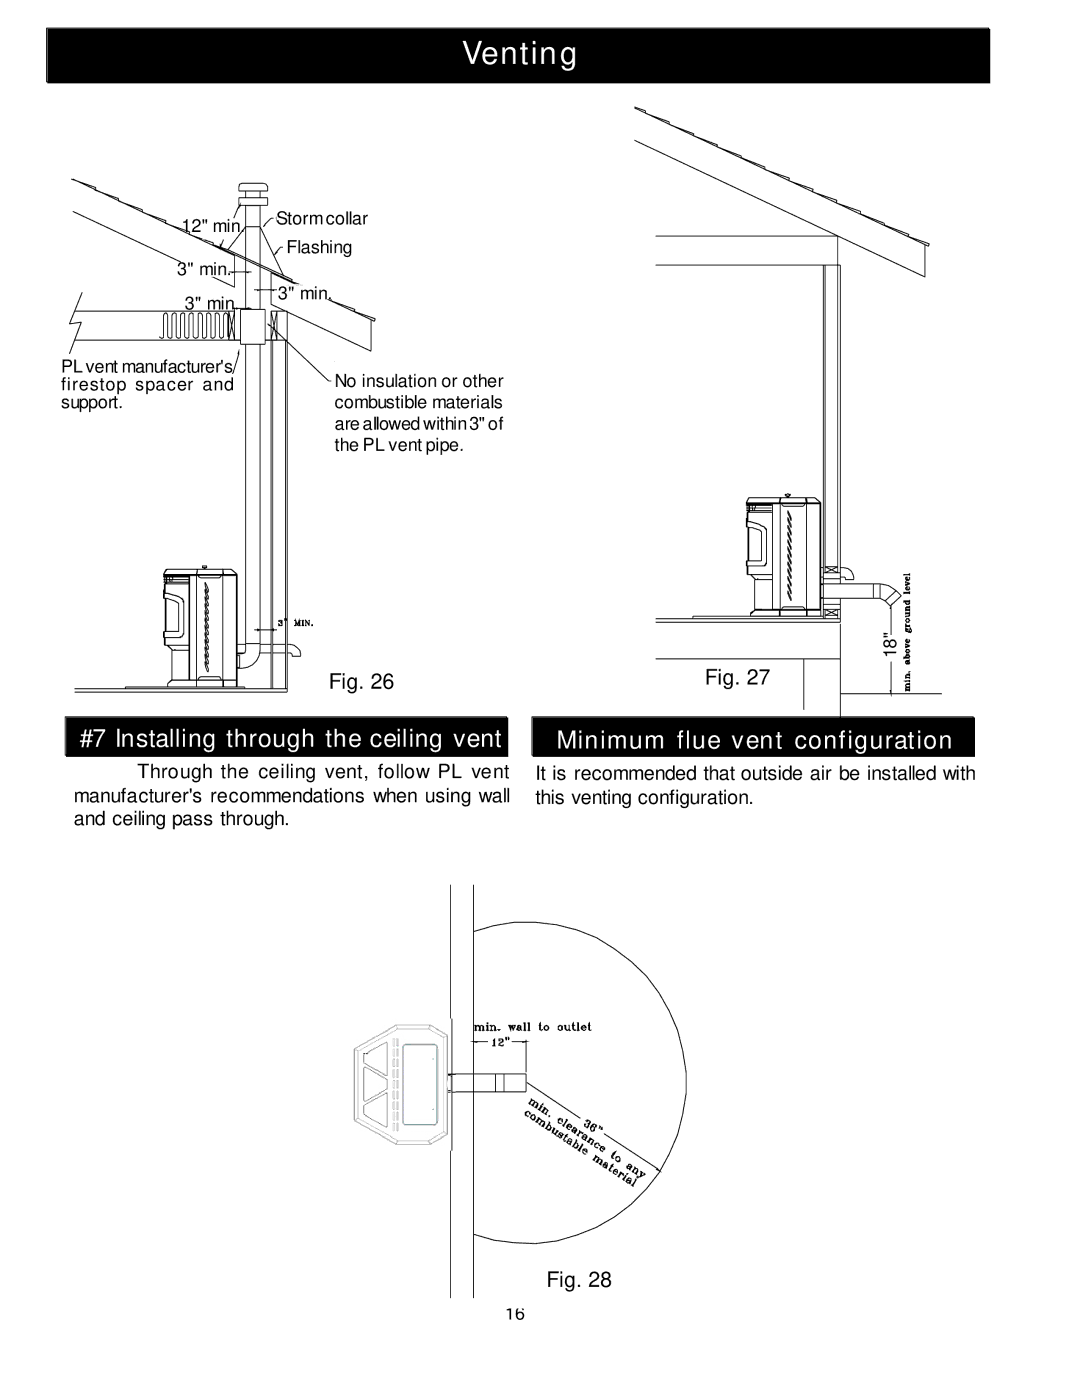 Harman Stove Company Advance Pellet Stove manual #7 Installing through the ceiling vent, Minimum flue vent configuration 